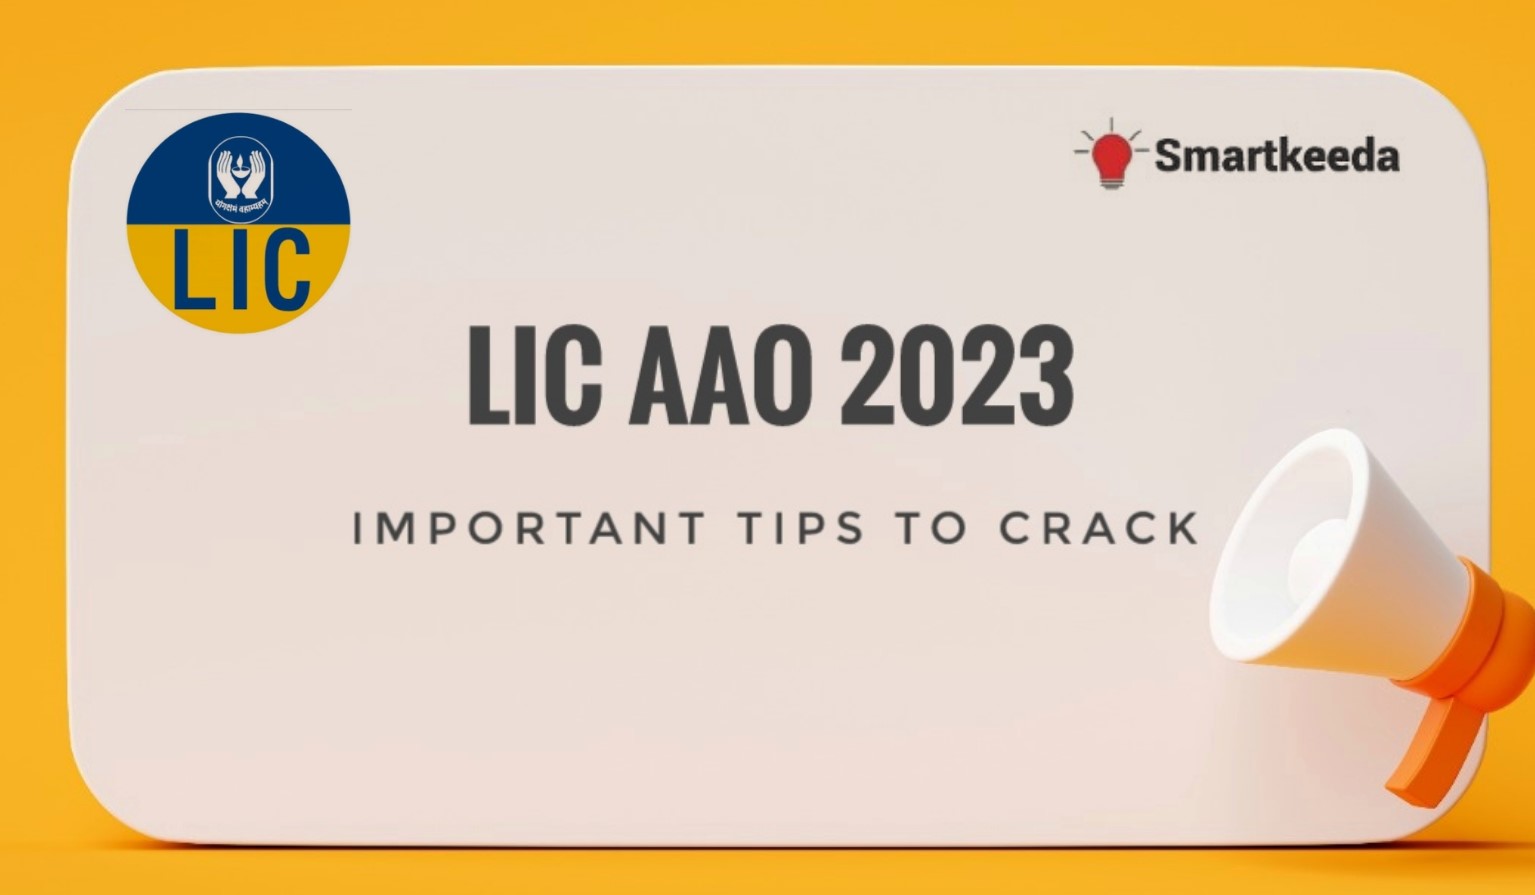 LIC AAO 2023 tips smartkeeda